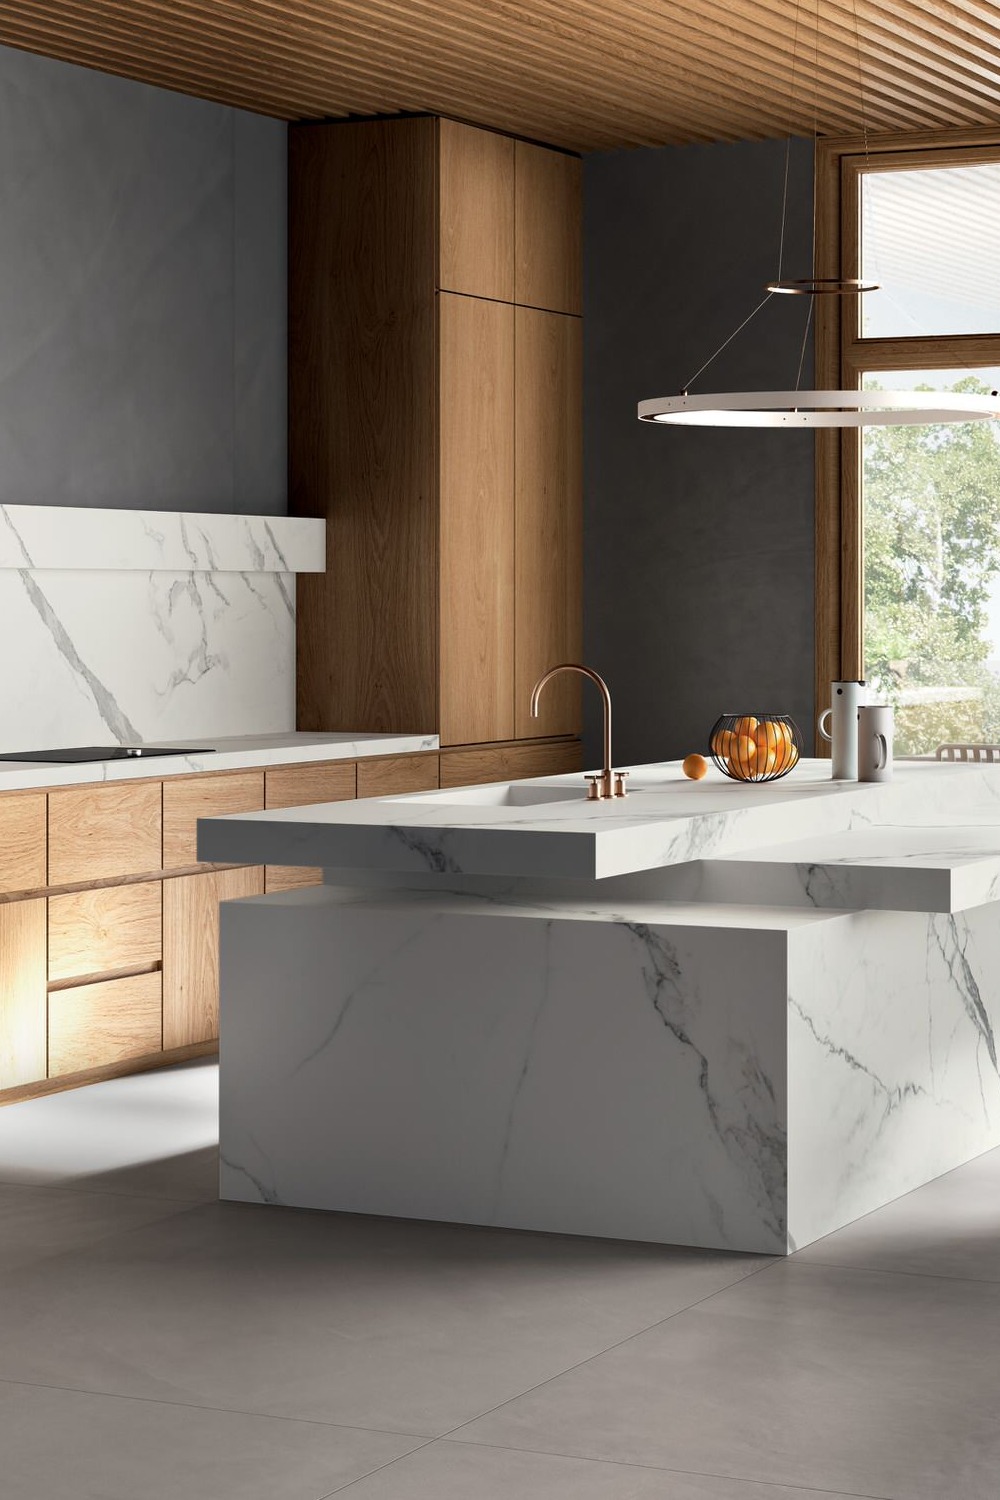 White Marble Look Porcelain Tile Floor Countertops Backsplash Flat Panel Dark Cabinets